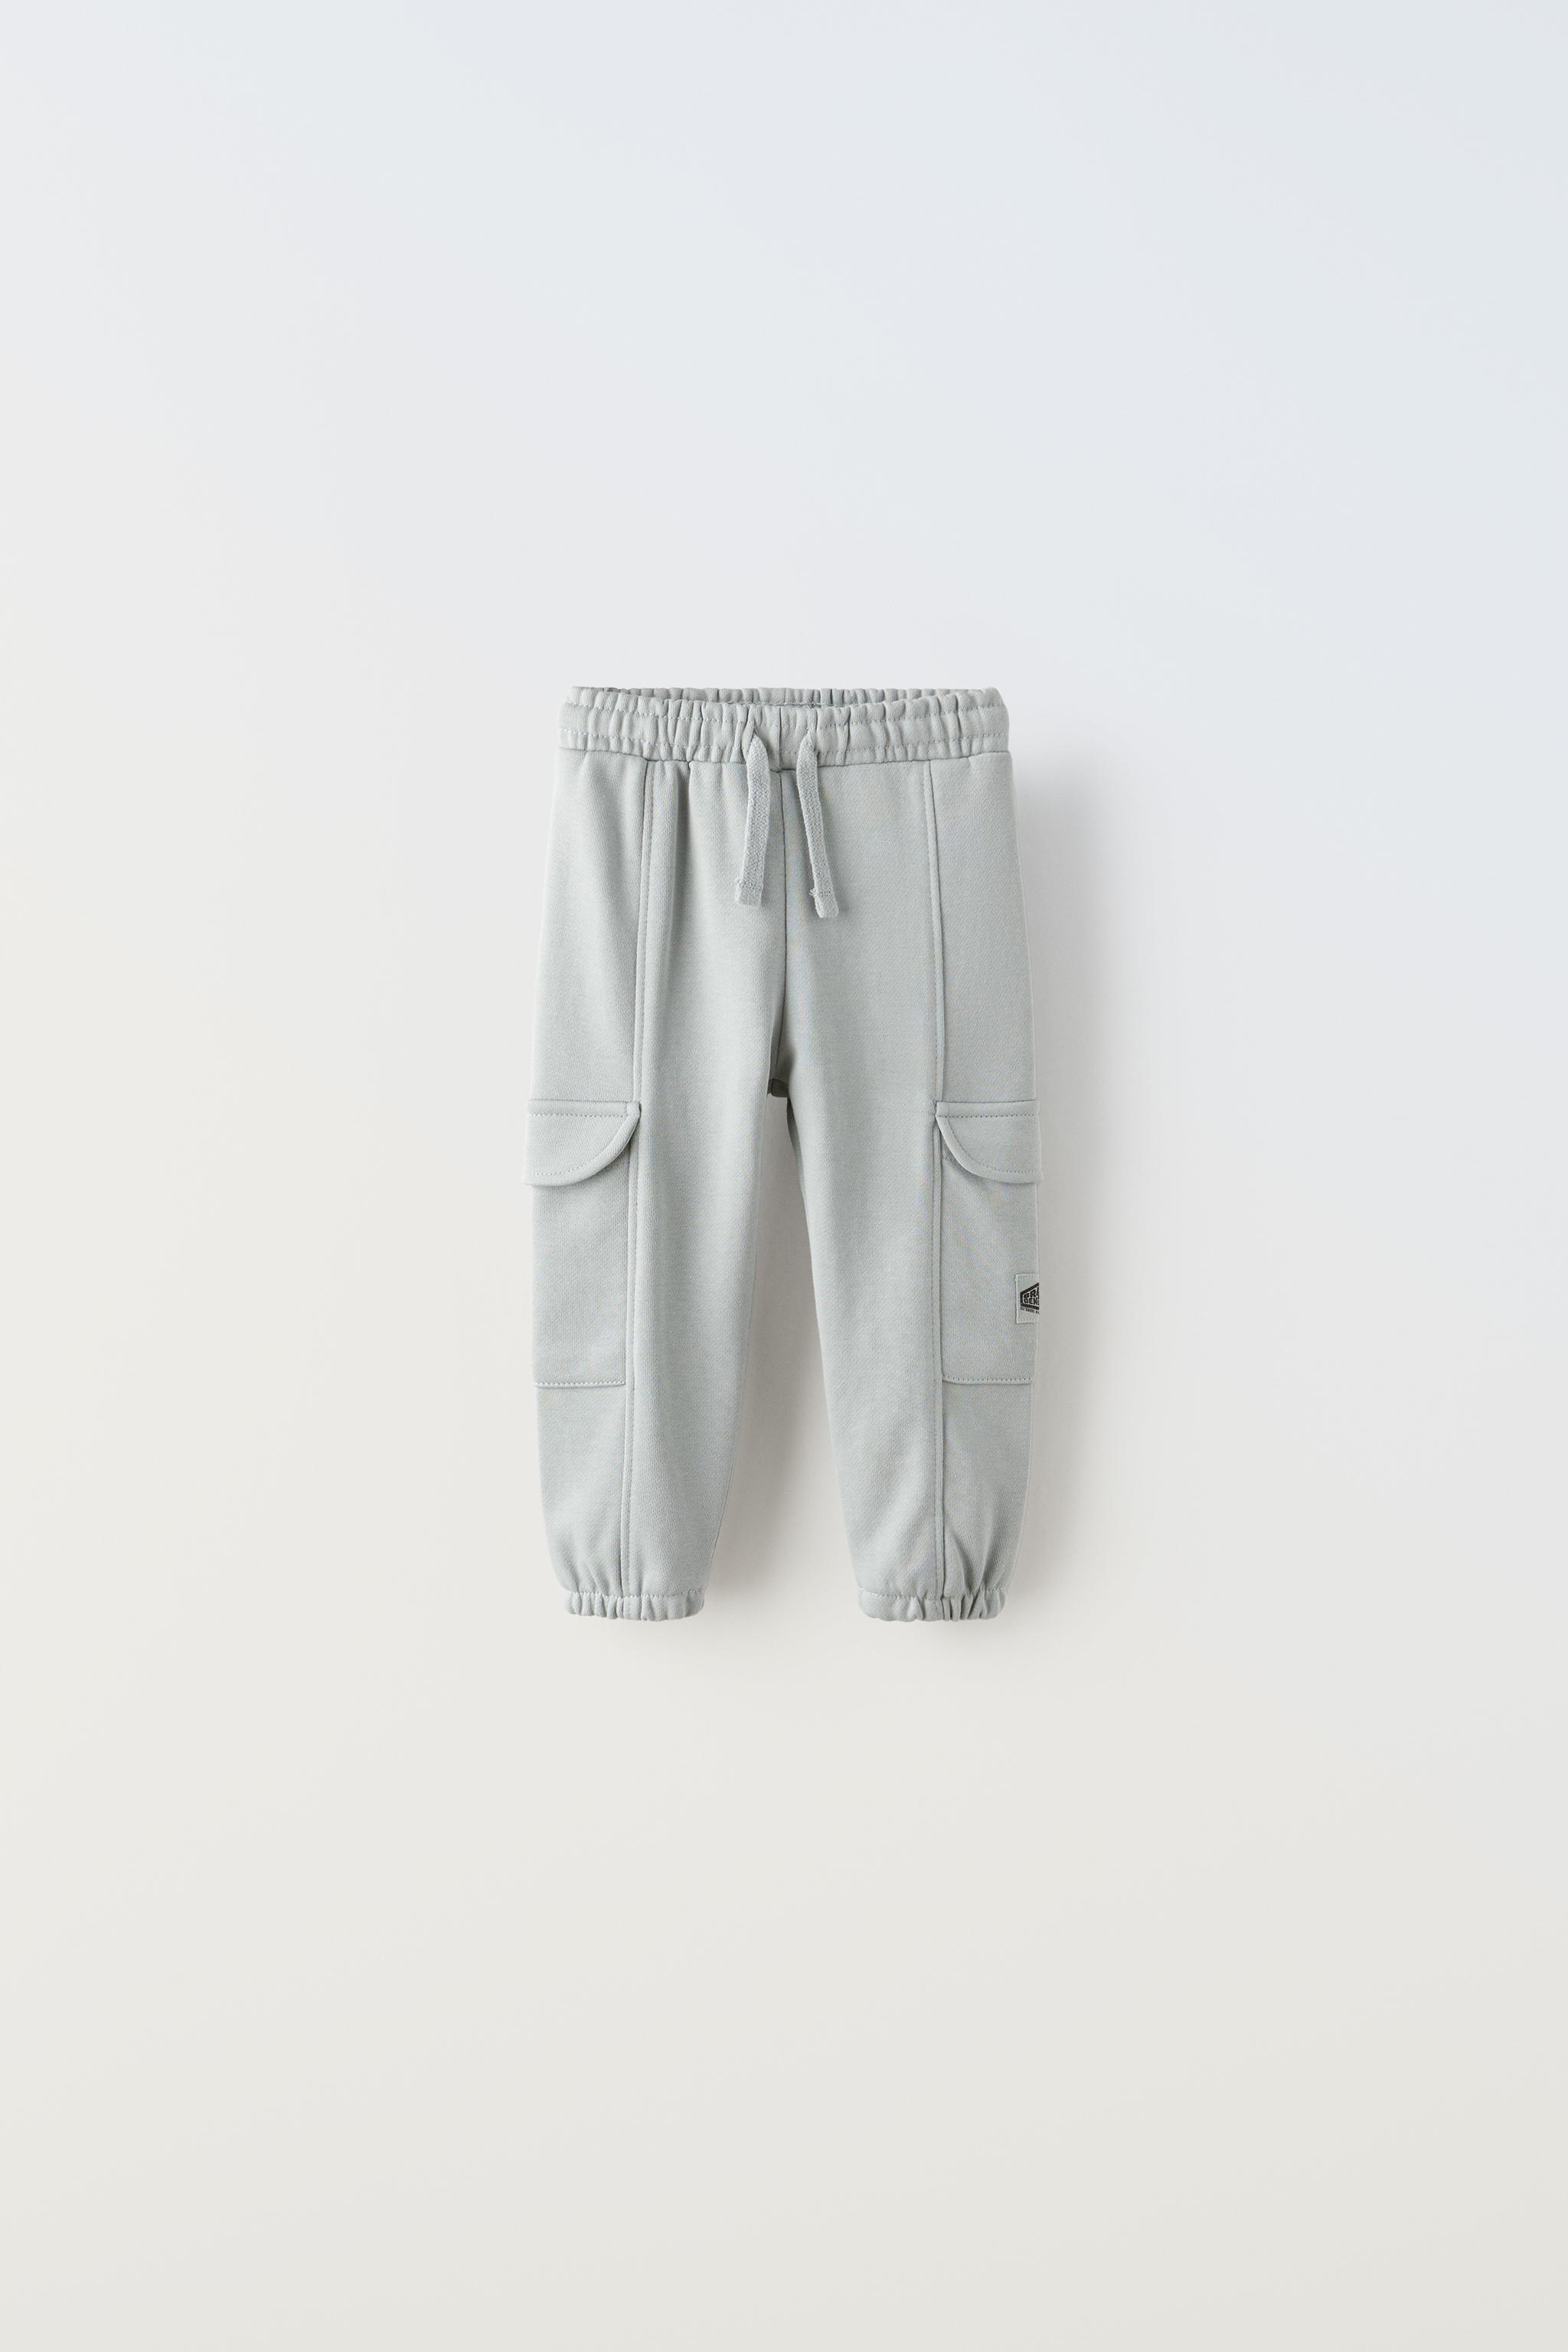 Zara Pocket Cargo Pants in Sand — UFO No More